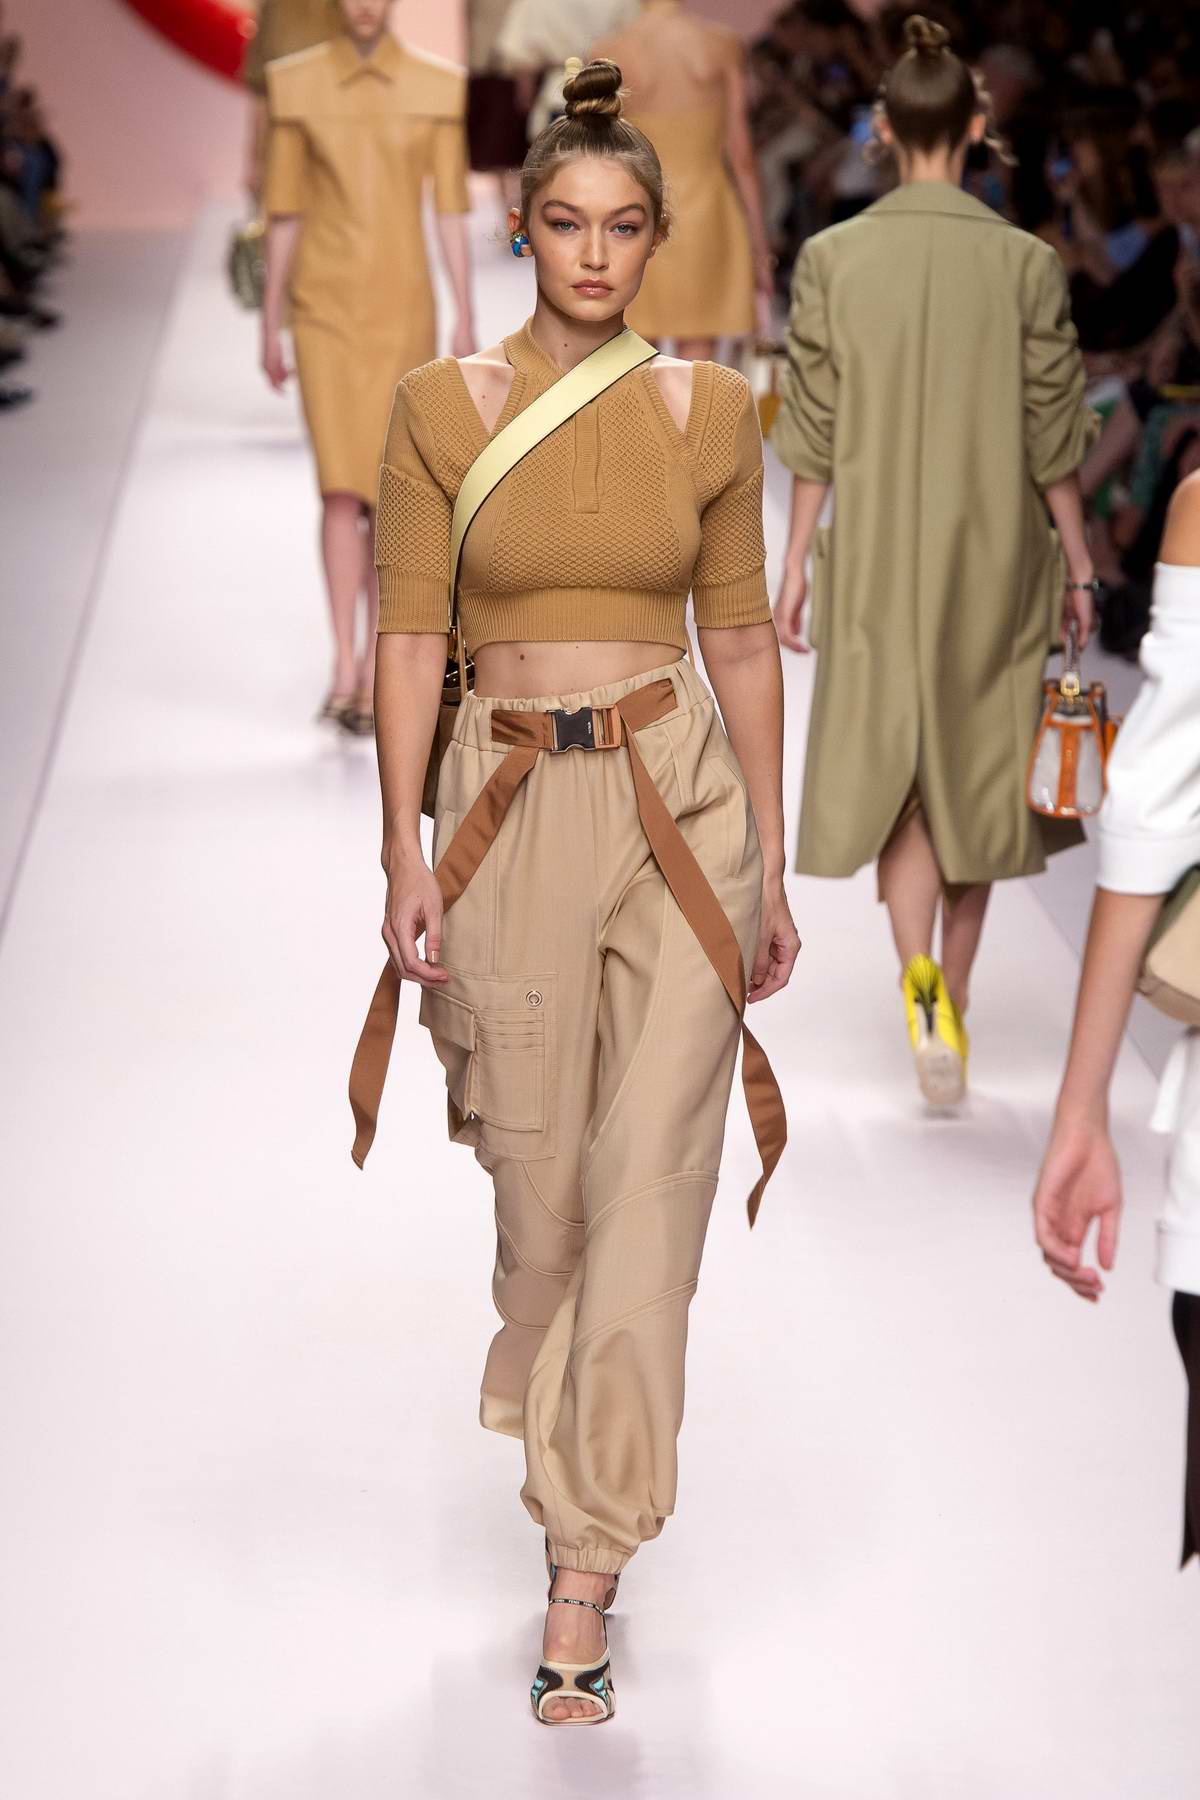 Gigi Hadid Walks The Runway For Fendi Fashion Show Summer Spring 2019 During Milan Fashion Week In Milan Italy 200918 3 